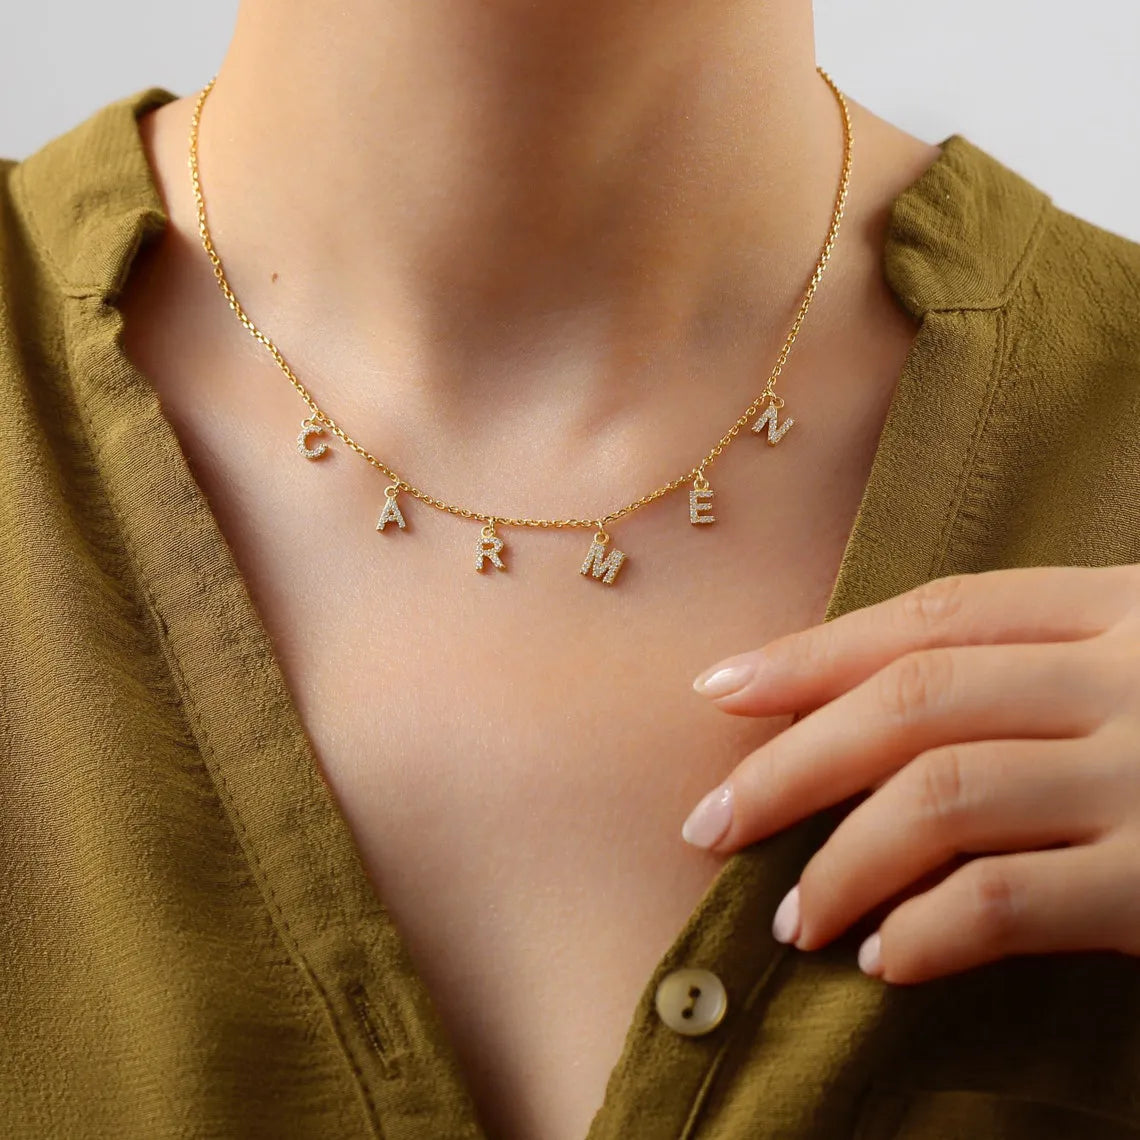 Rhinestones Personalized Necklace